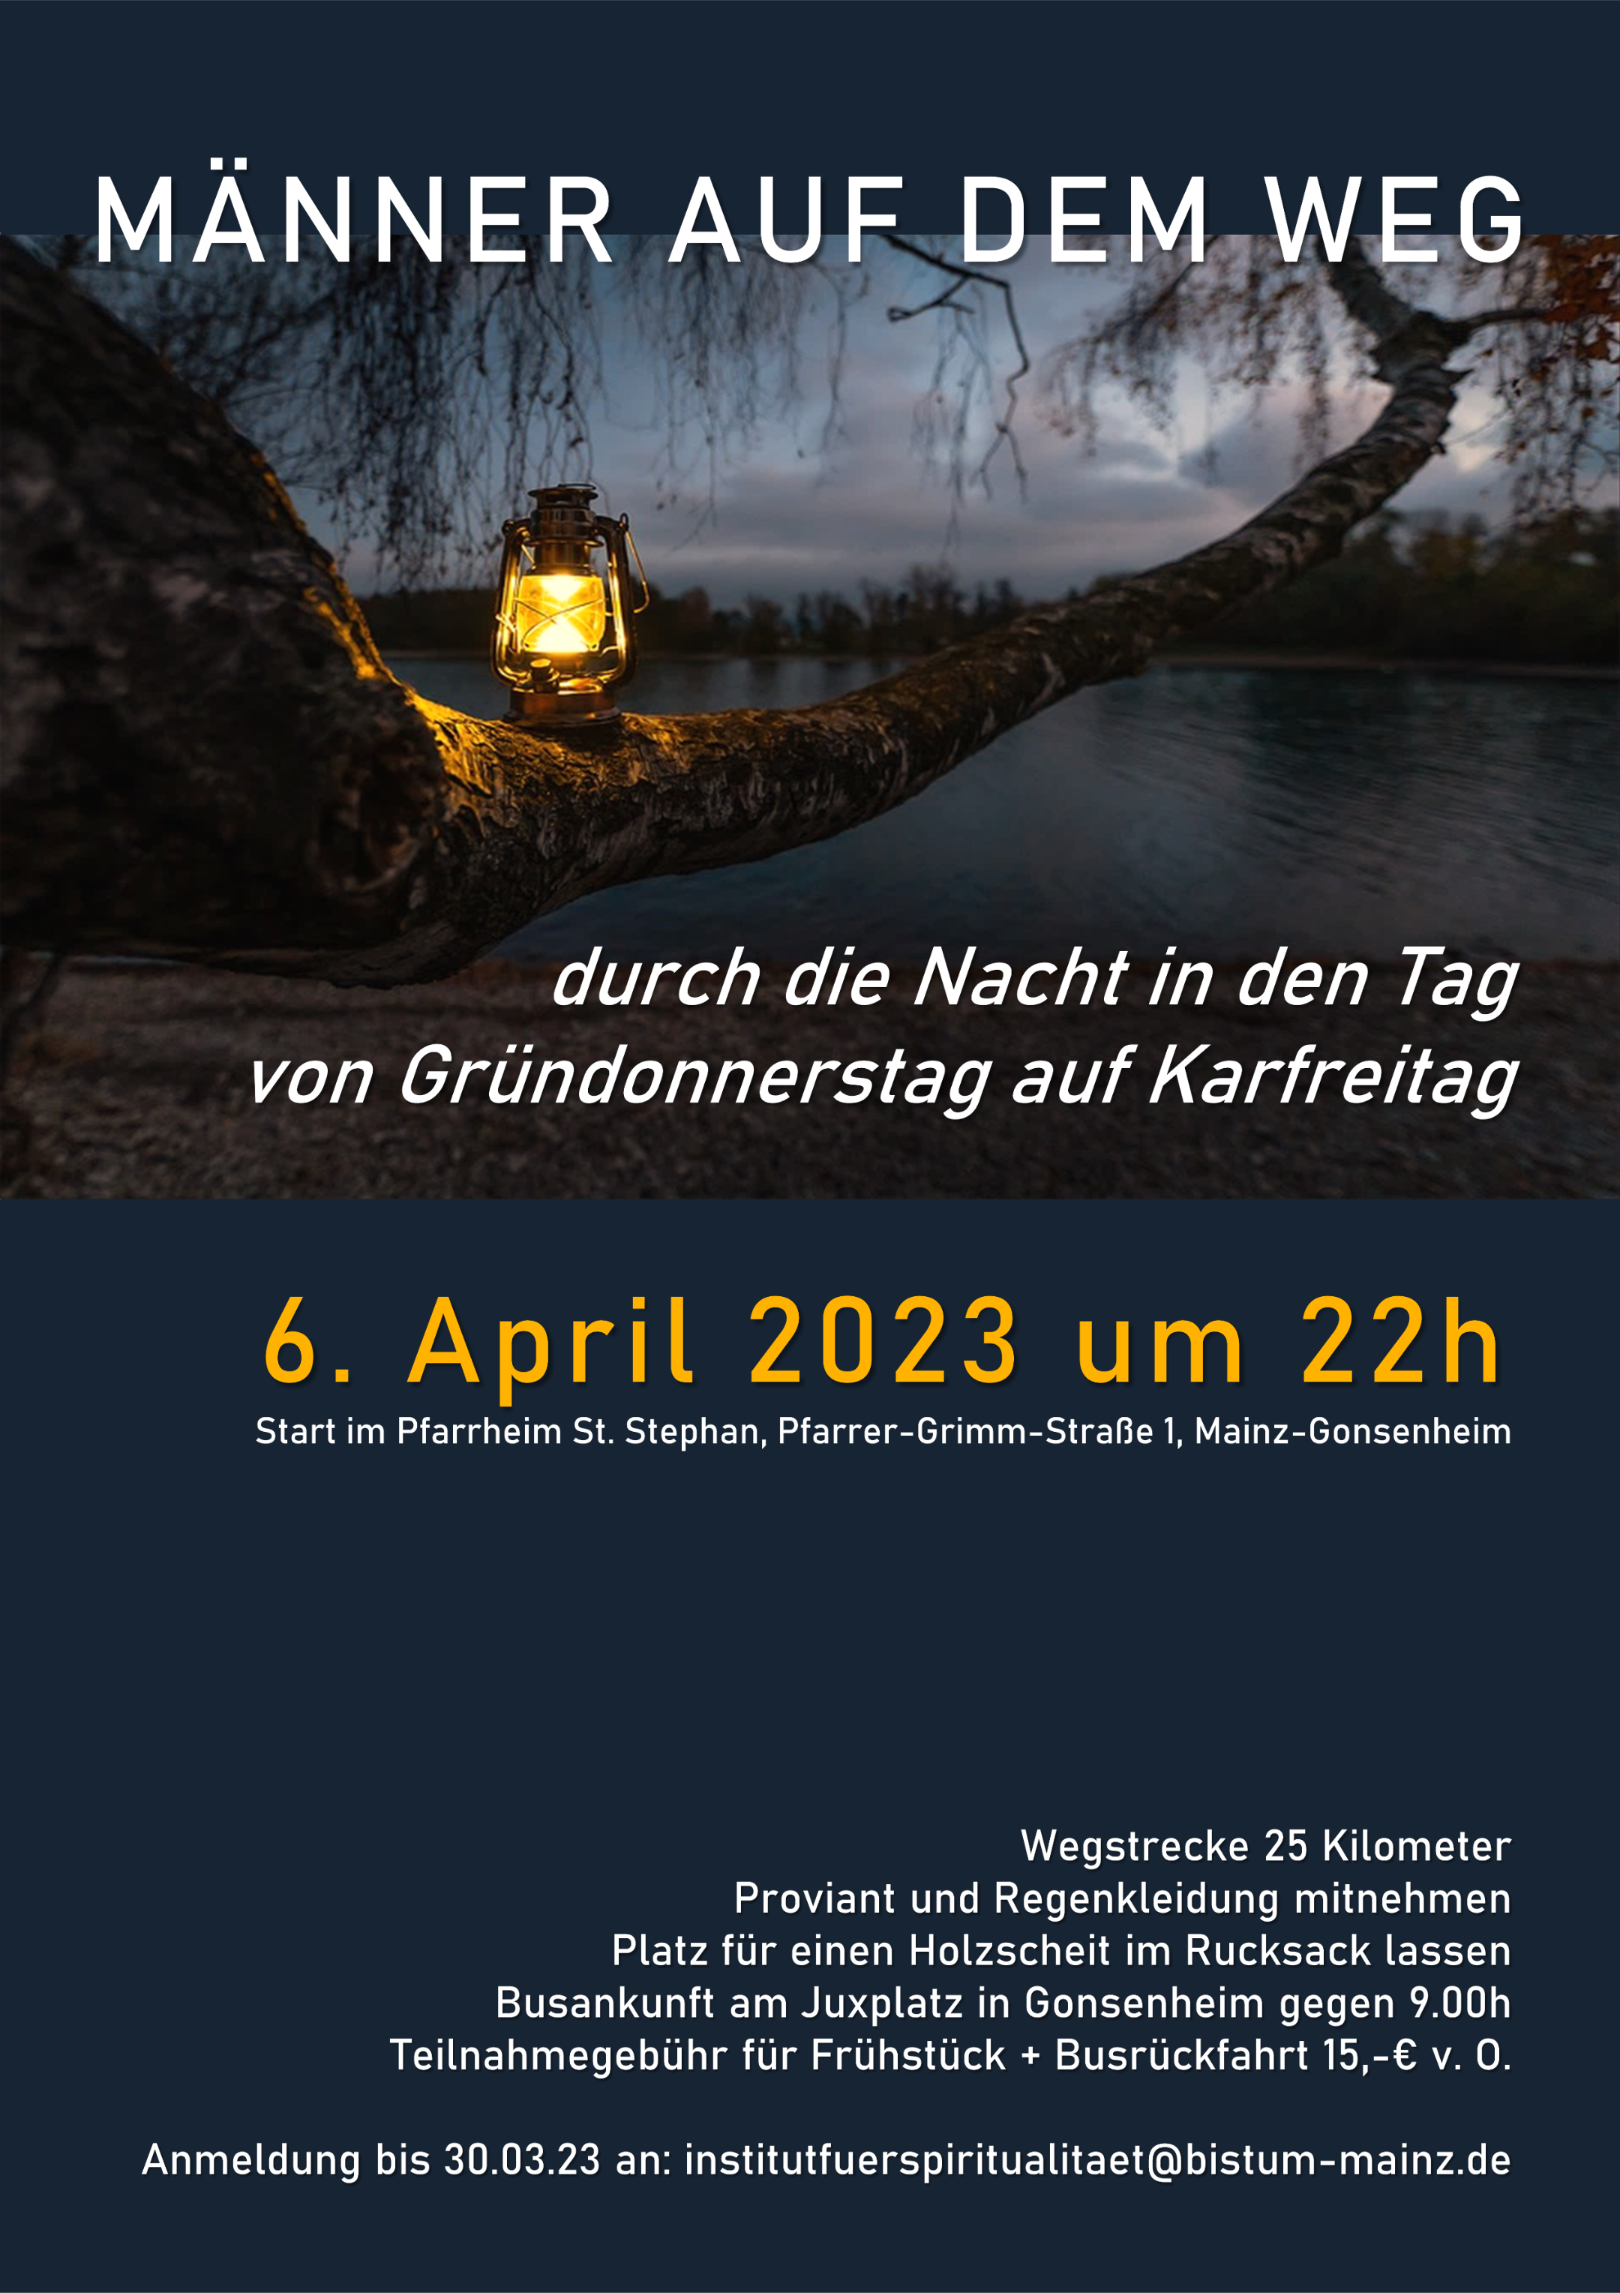 Gründonnerstag 2023 MW30.01.23 (1) (c) Bardo Zöller